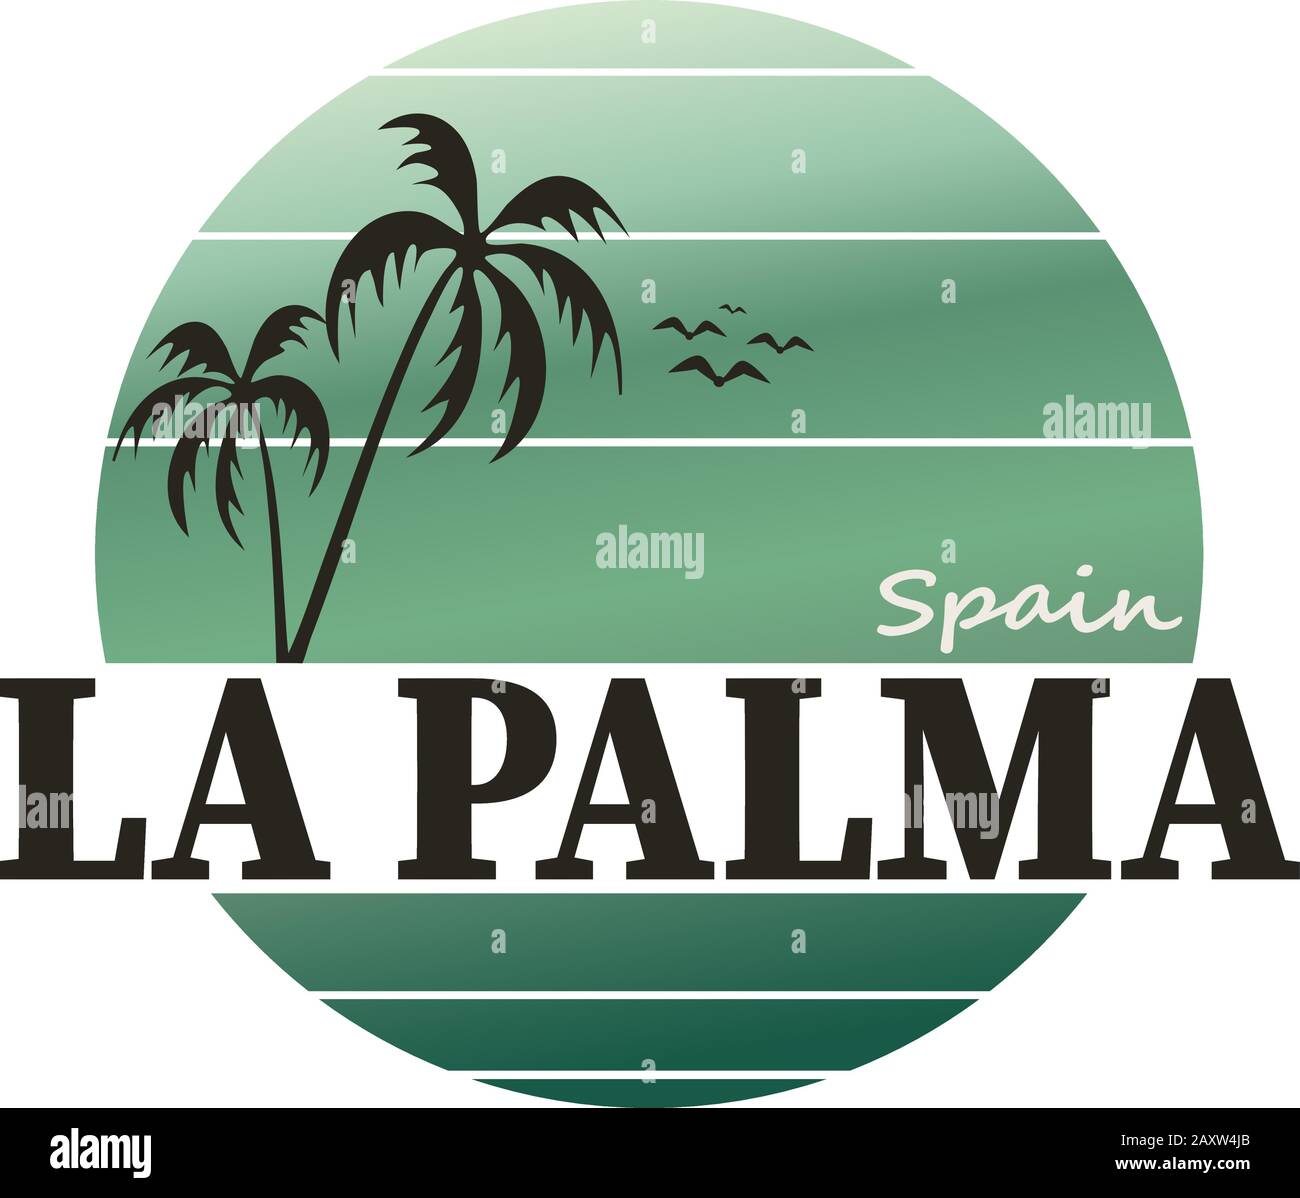 La Palma logo sign on white background, vector illustration Stock Vector